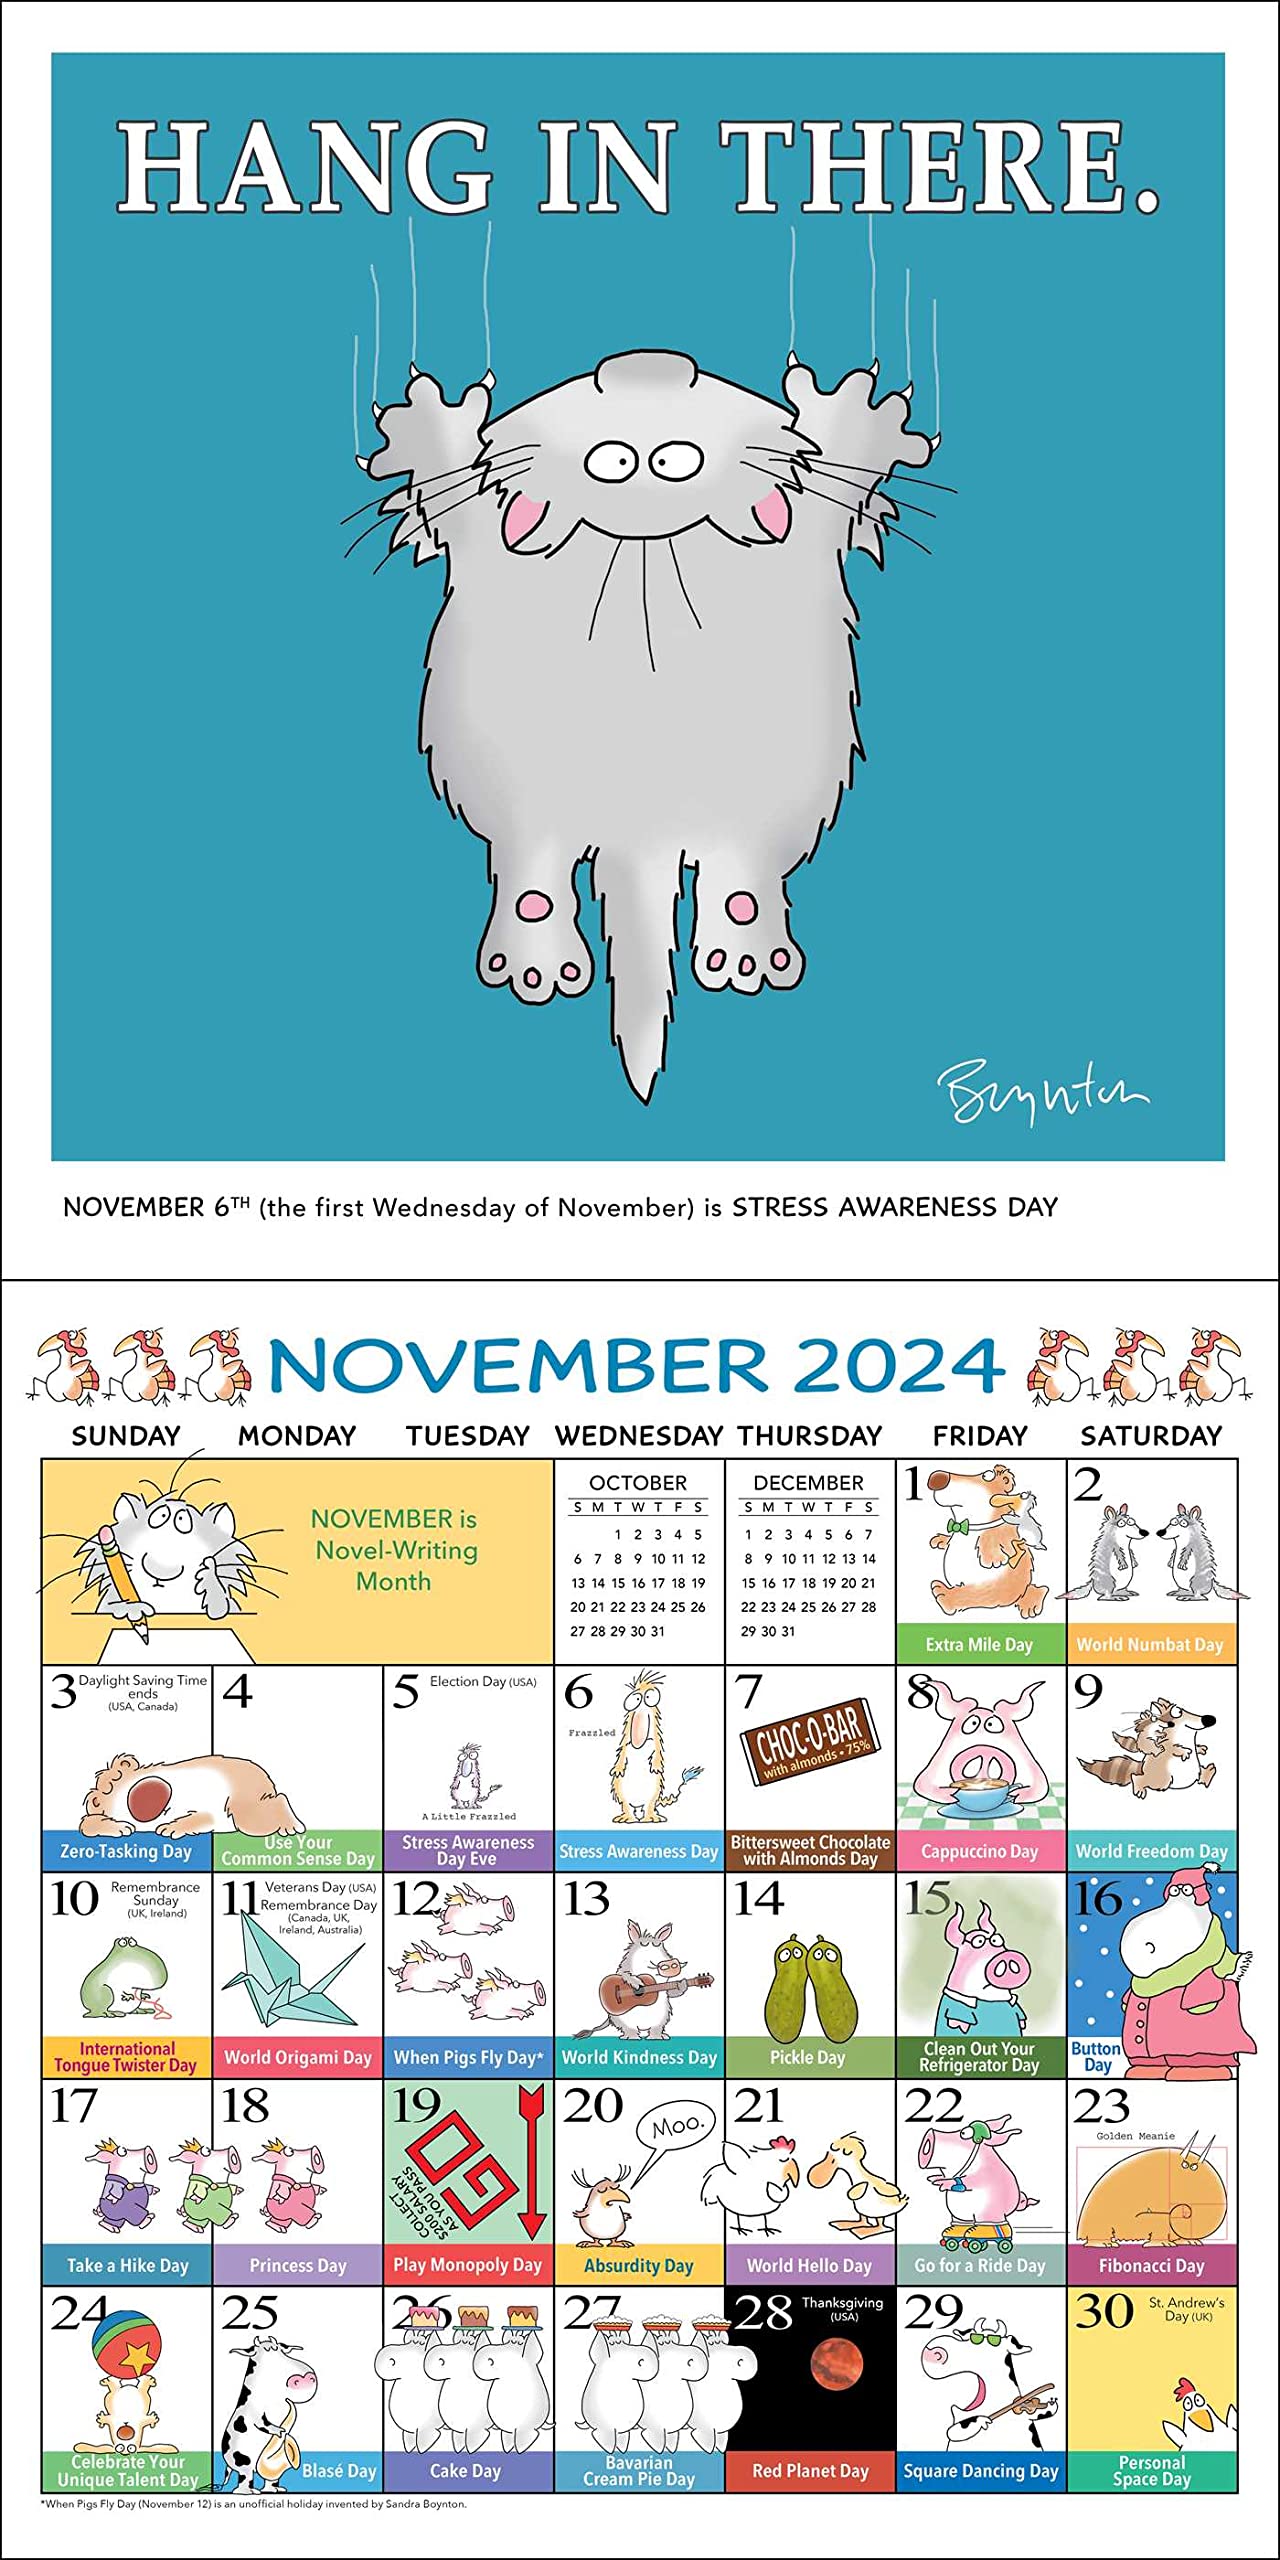 Sandra Boynton's Every Day's a Fabulous Holiday 2024 Wall Calendar